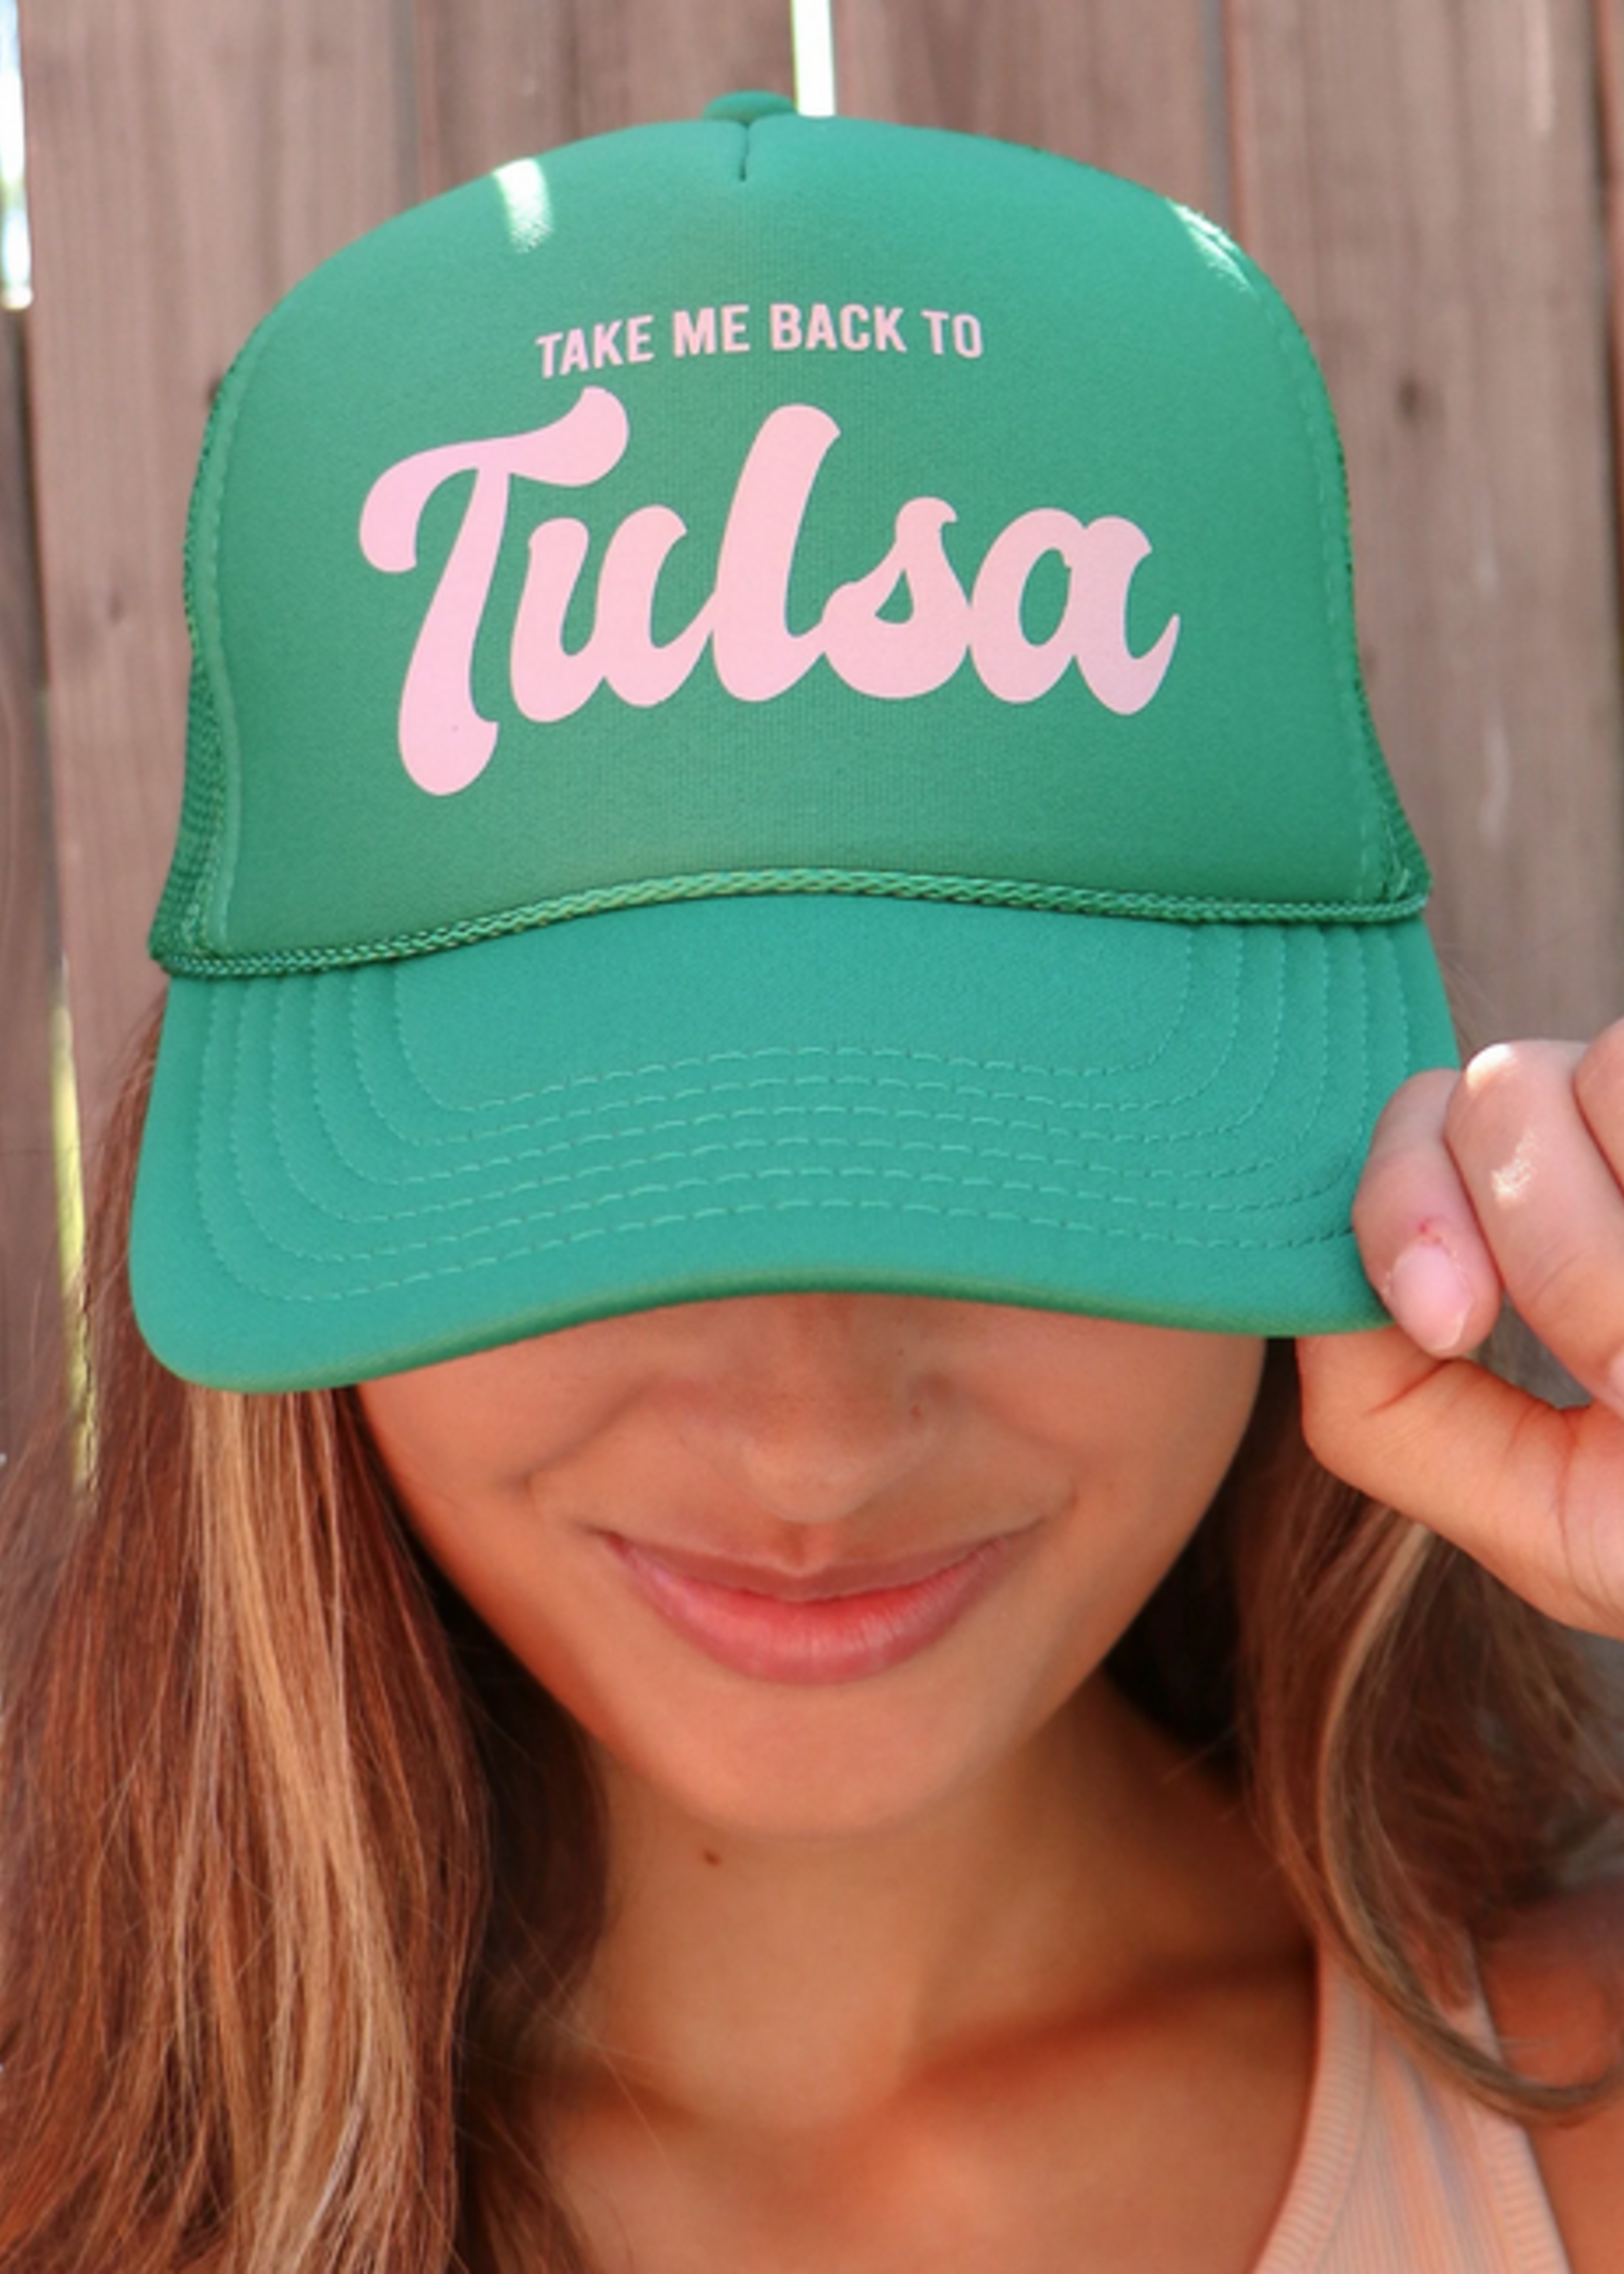 LivyLu take me to back tulsa trucker hat - green